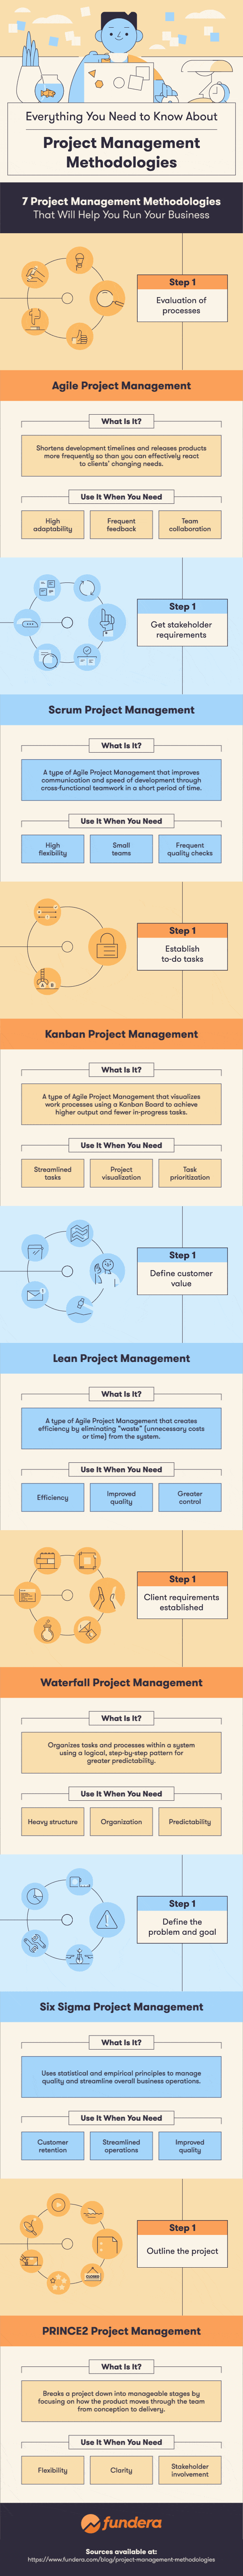 7 Project Management Methodologies Infographic